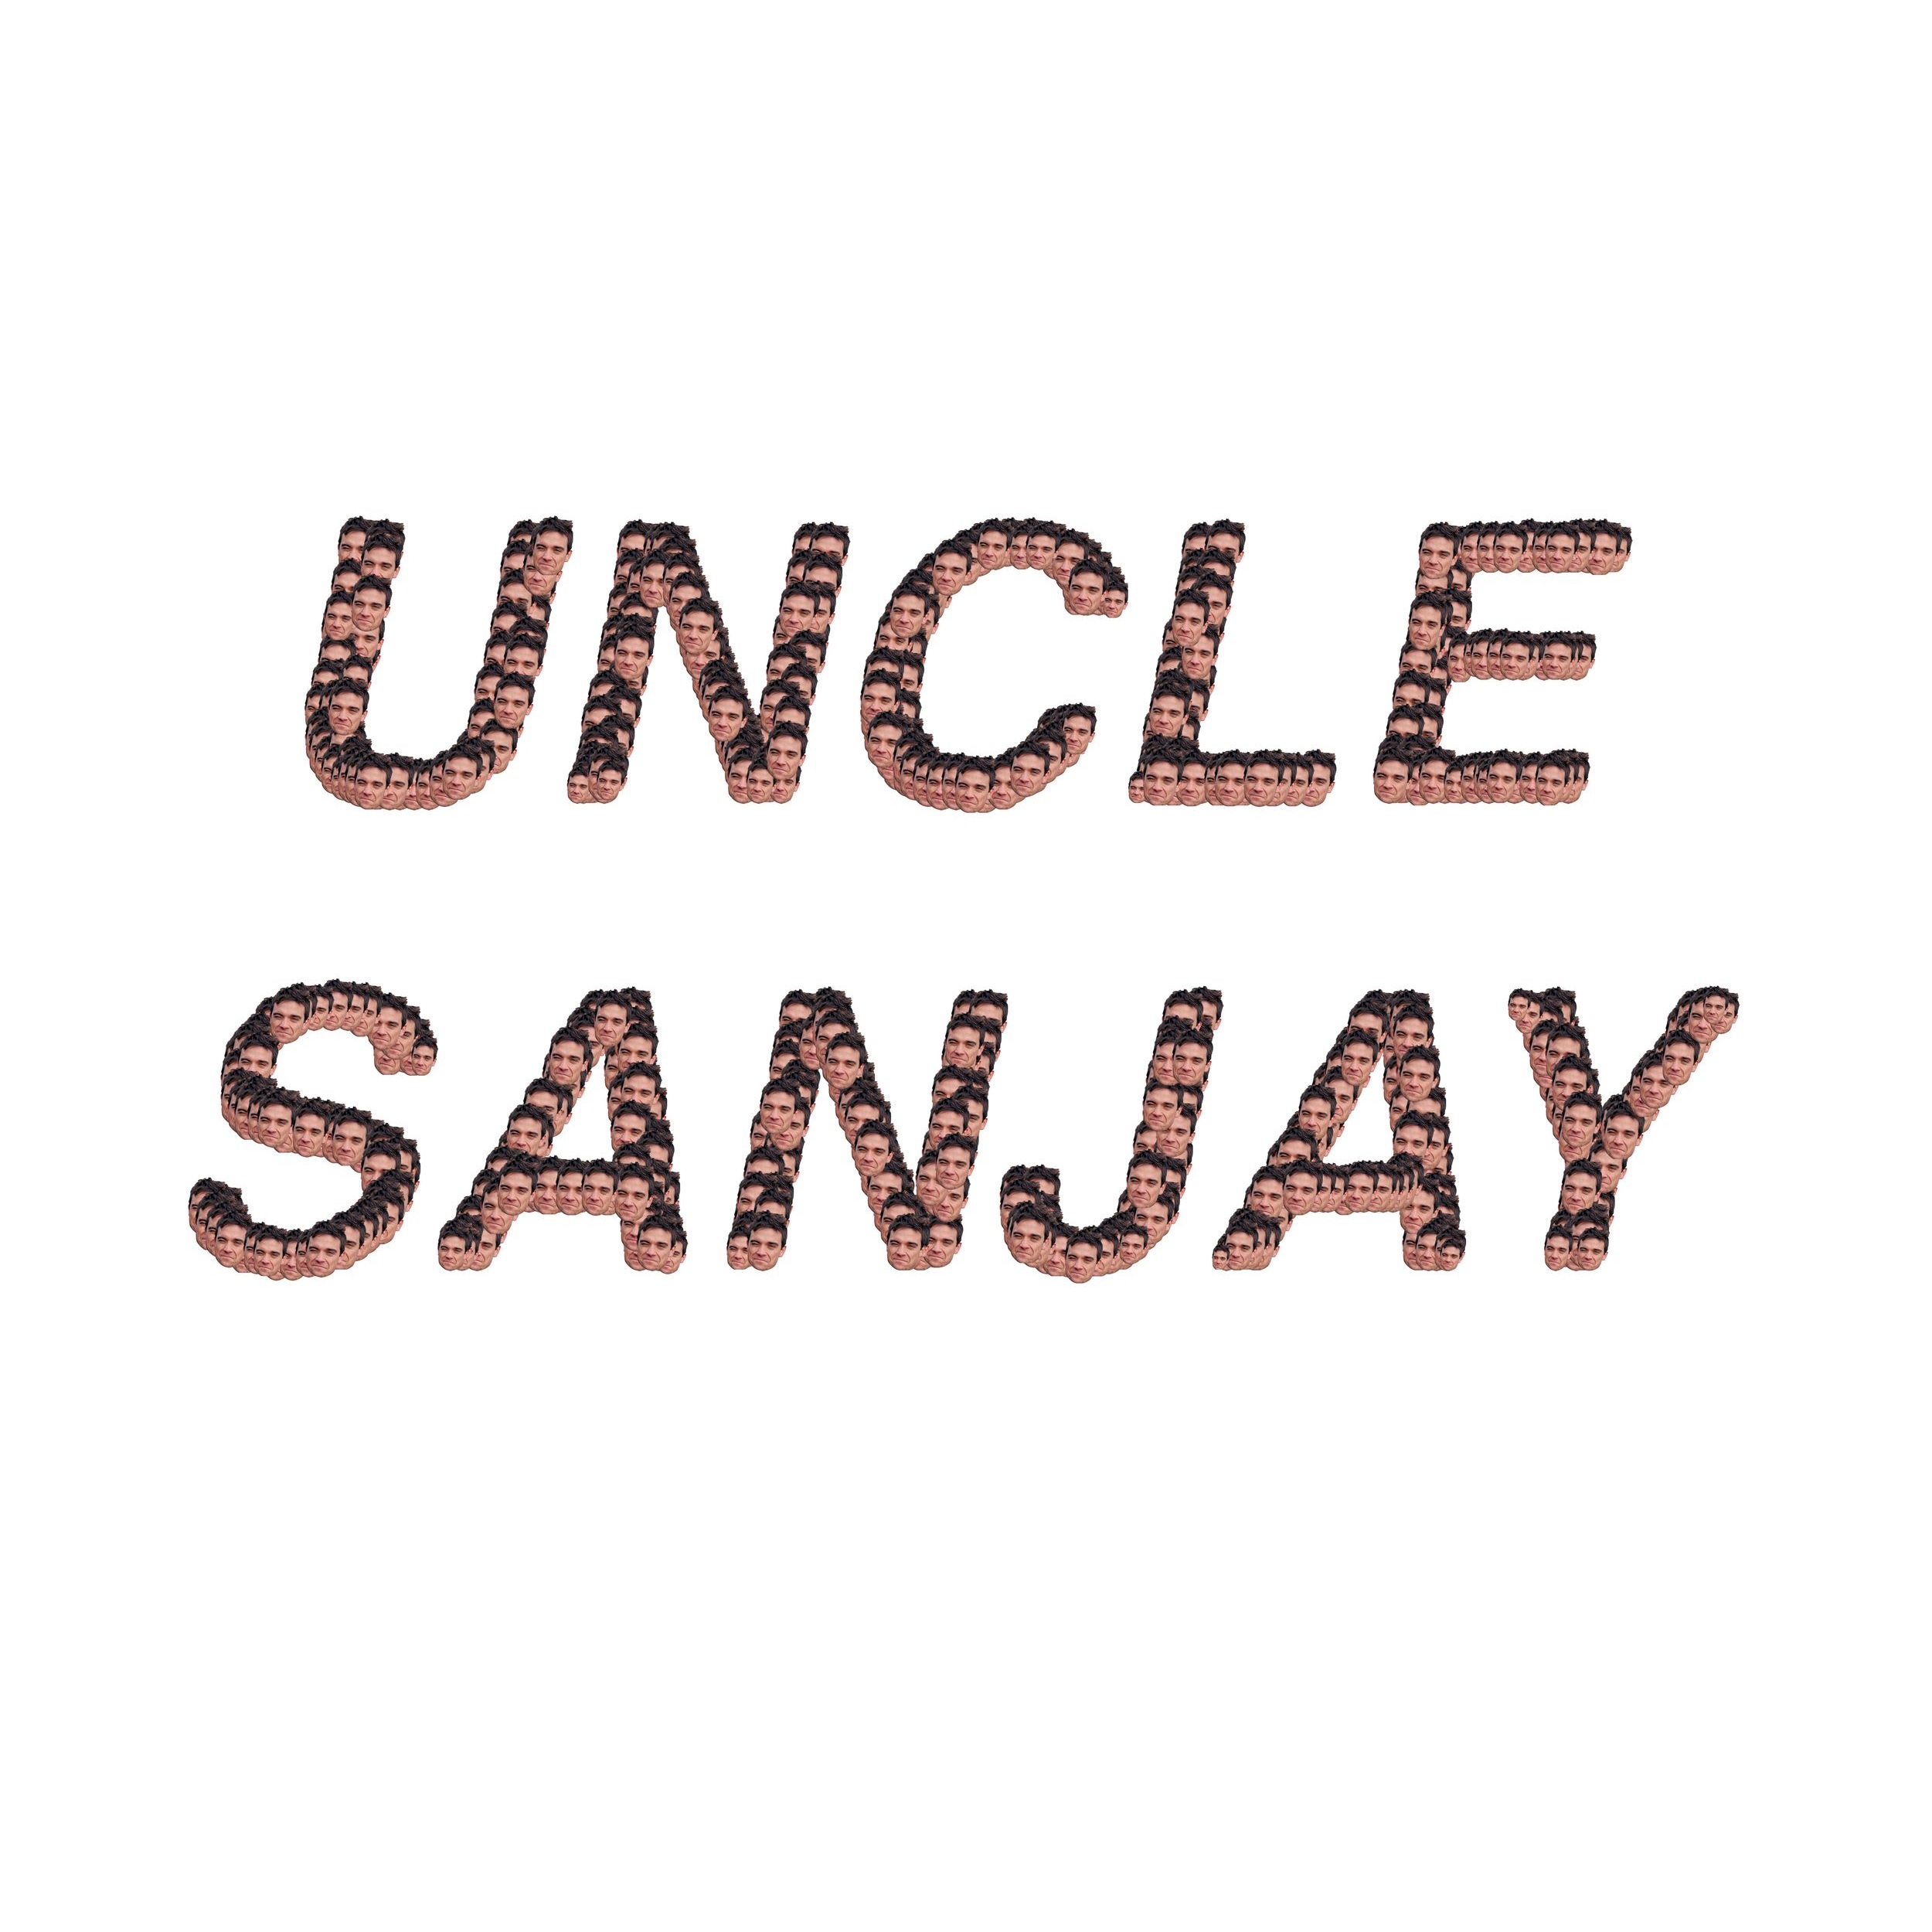   Uncle Sanjay/Robbie Williams,&nbsp; 2018, vinyl decal, 120 x 60 cm&nbsp;    